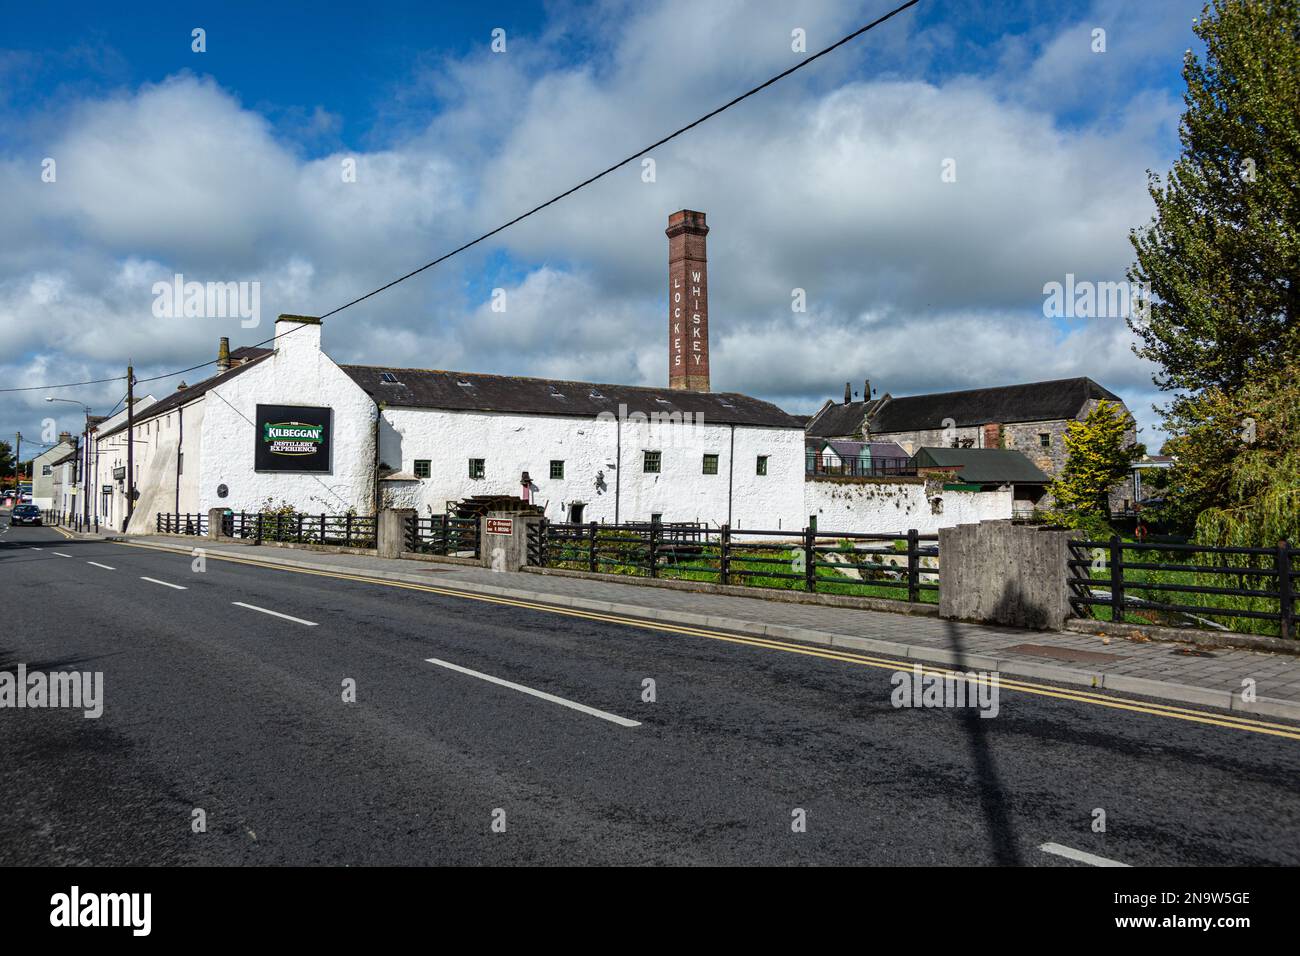 Fiume Brosna, Contea di Westmeath, Irlanda, distilleria Kilbeggan Foto Stock